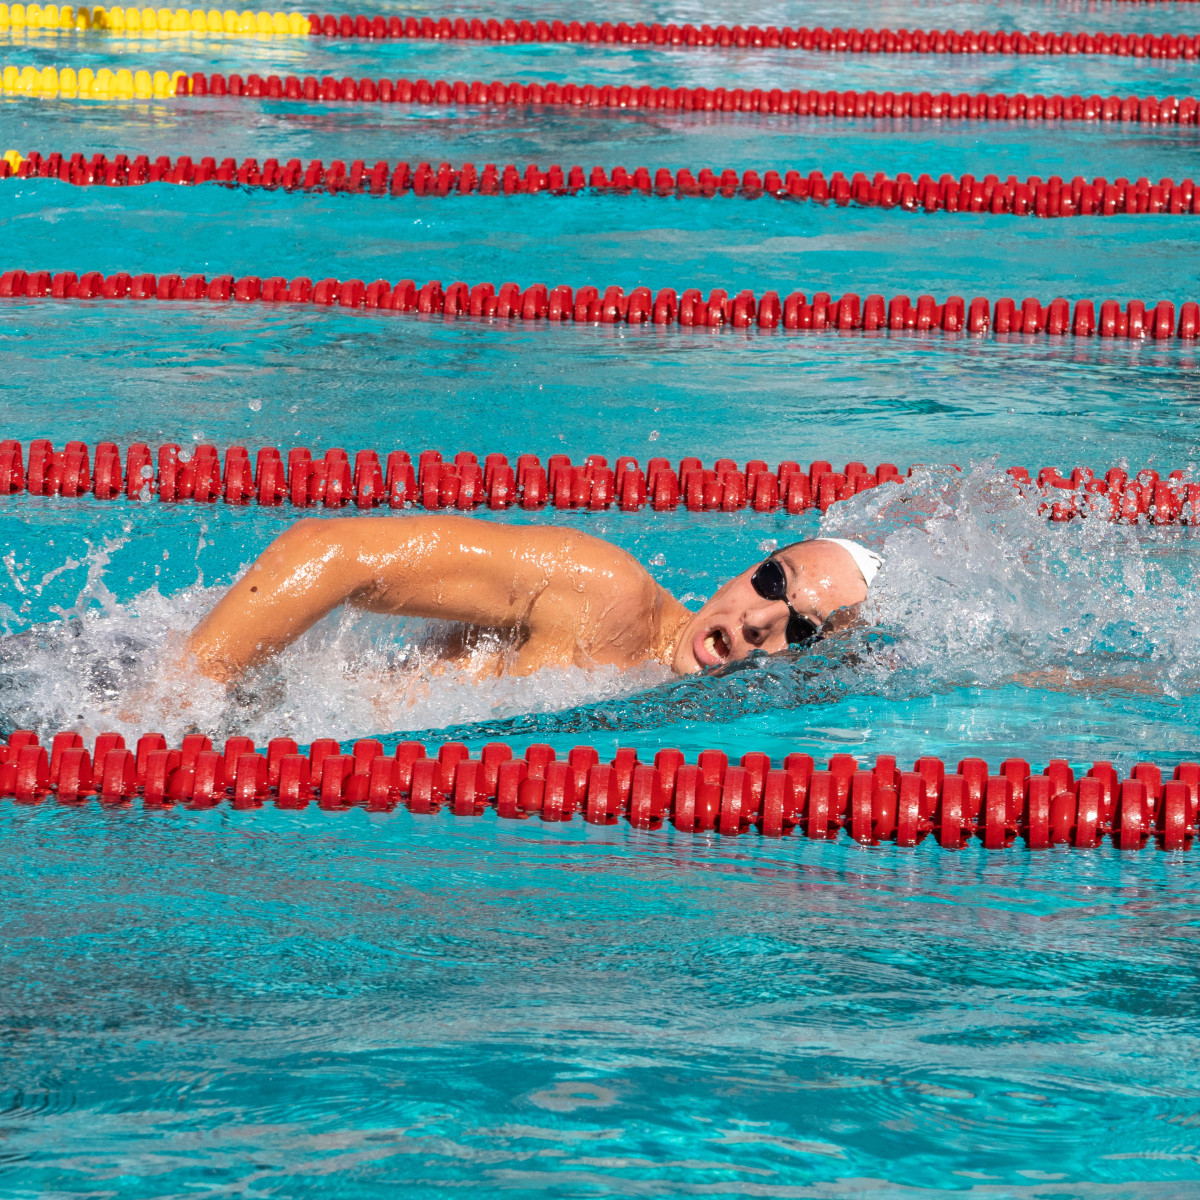 Geremia Freri is this week's Men's Swimmer of the Week and Co-Men's Newcomer of the Week